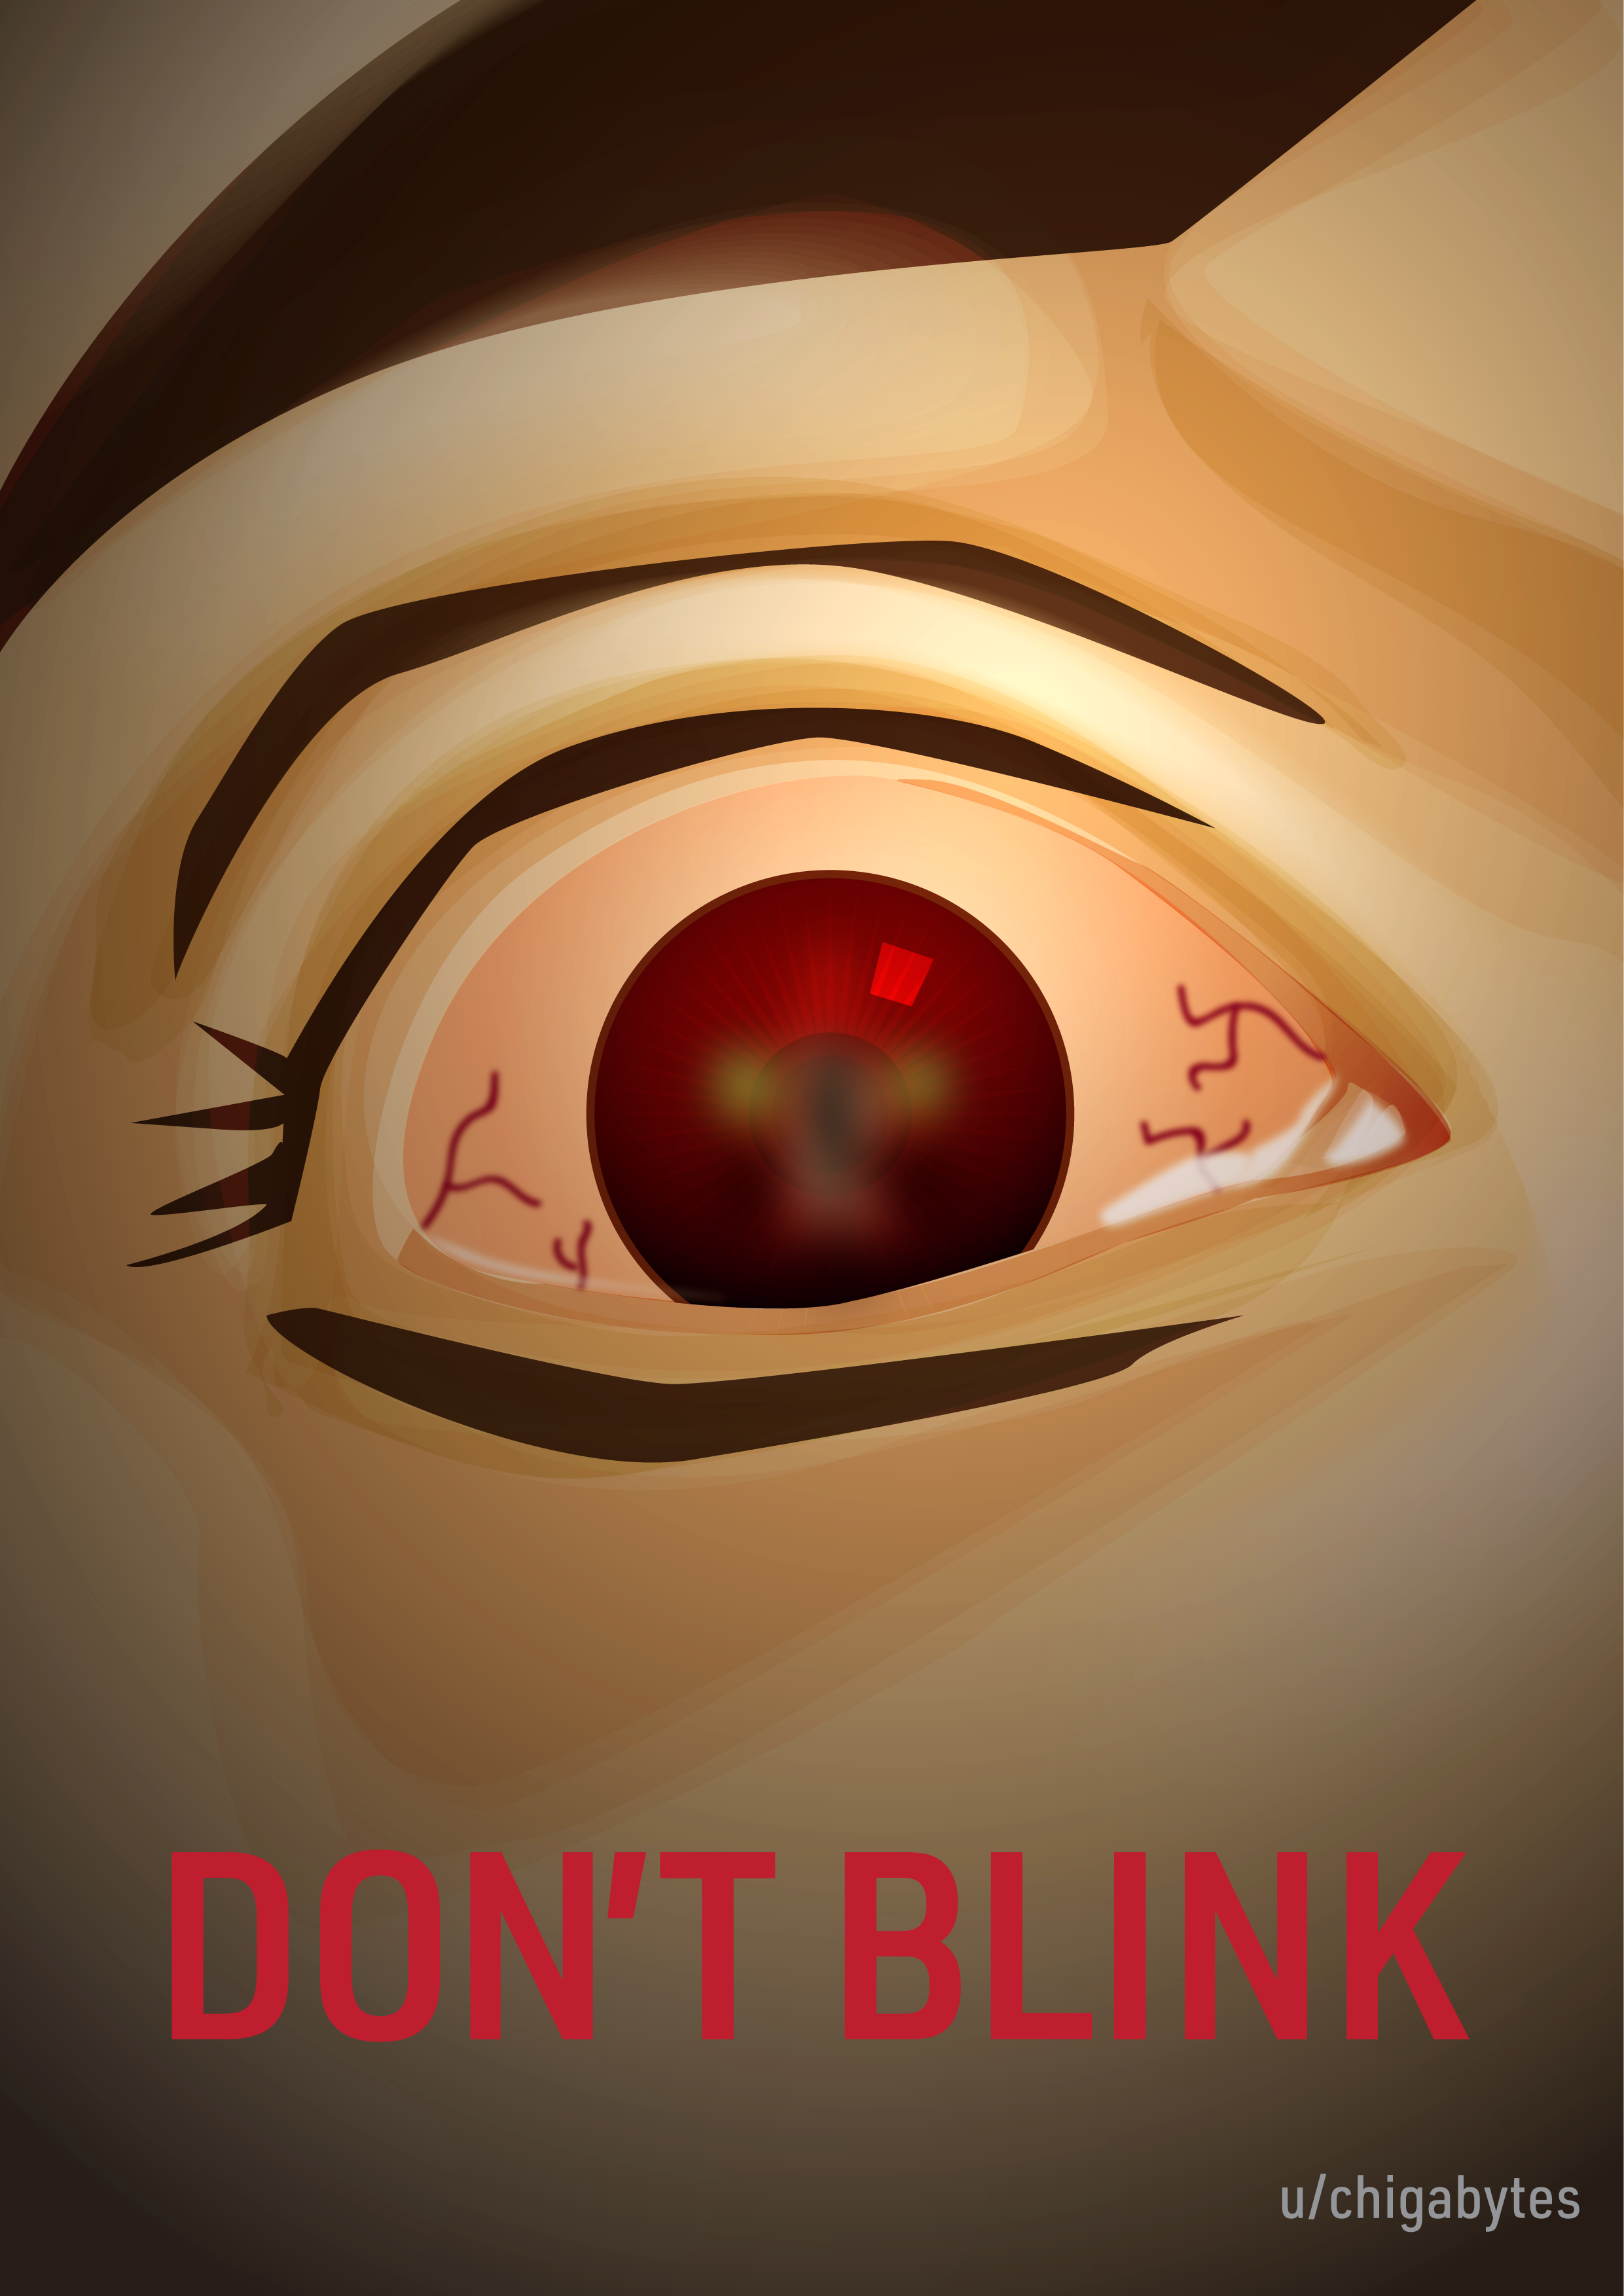 Scp 173 Blink One Eye